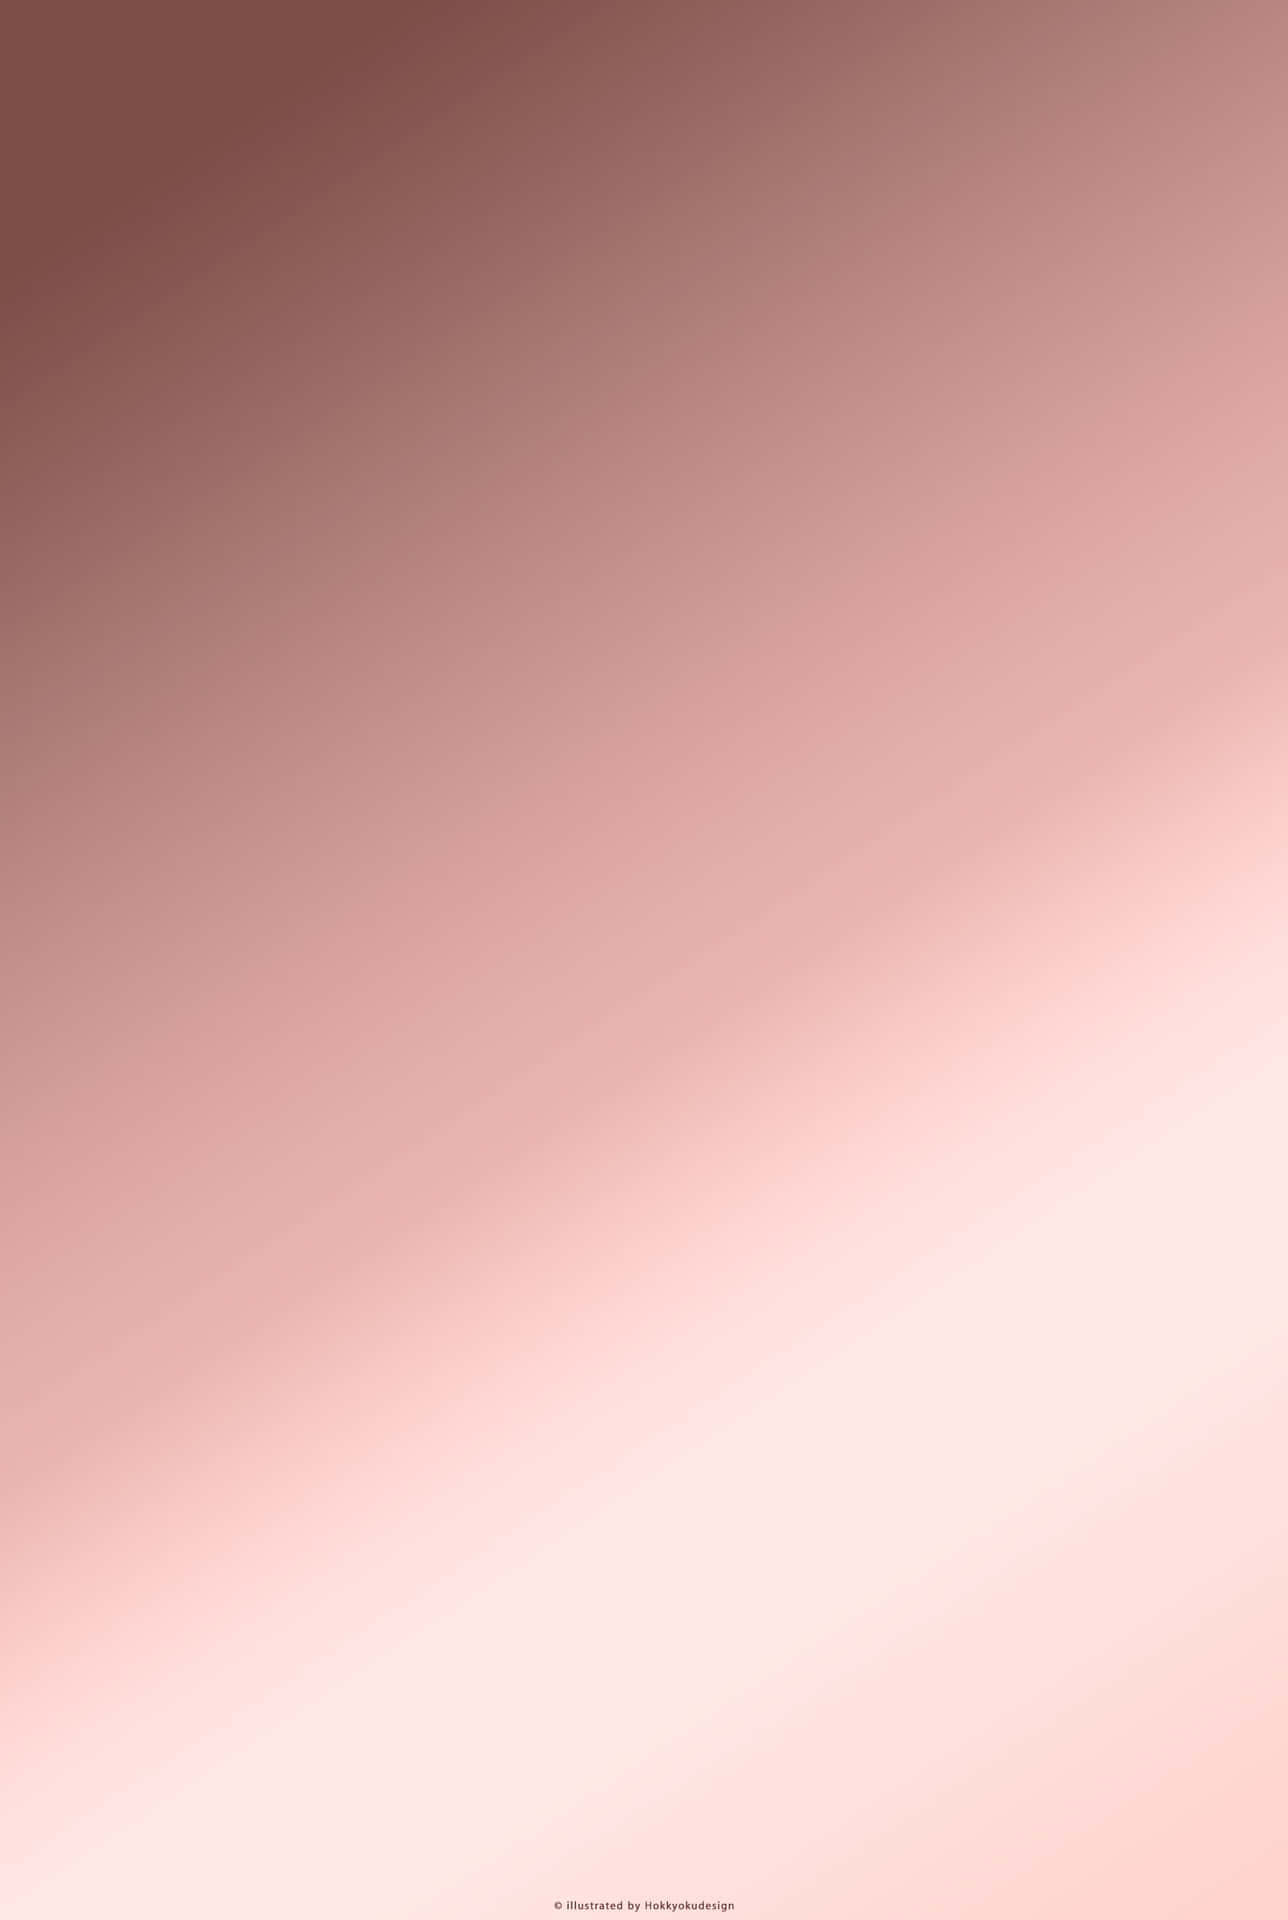 Rosegold Iphone 5 Mit Hartem Verlaufsmuster Wallpaper